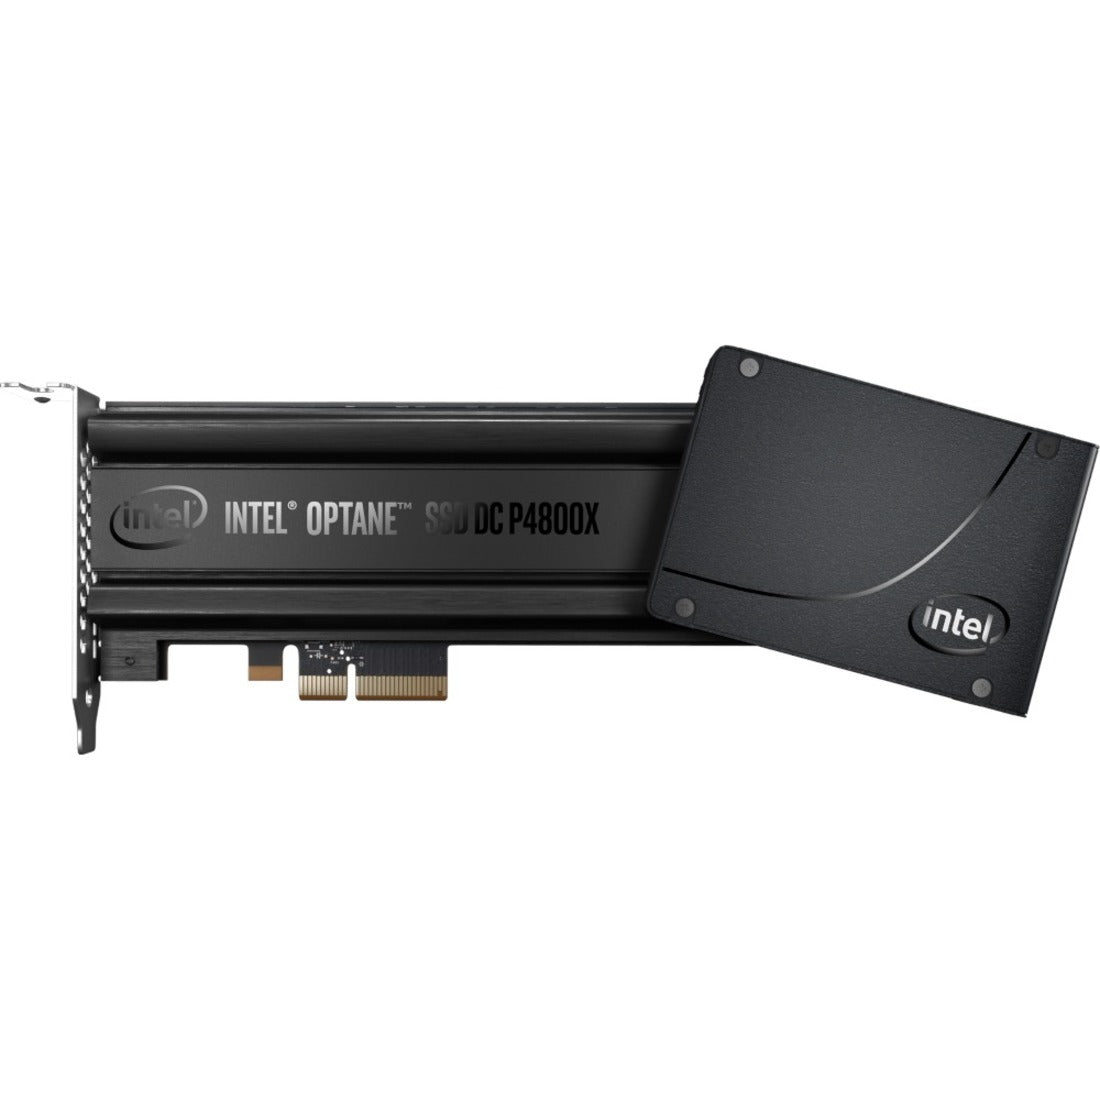 Intel SSD DC P5800X SERIES 1.6TB PCIe X4 3D Single Pack (SSDPF21Q016TB01), High Performance Solid State Drive for Fast Data Storage